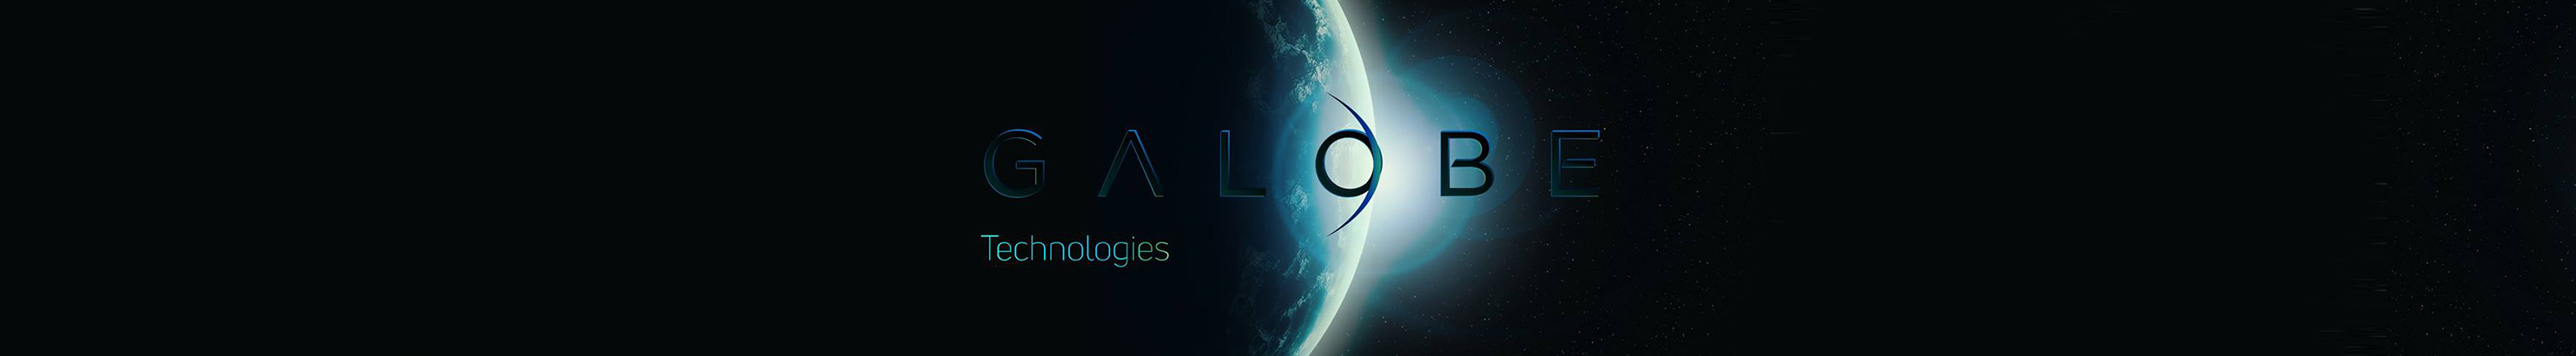 Galobe Technologies's profile banner